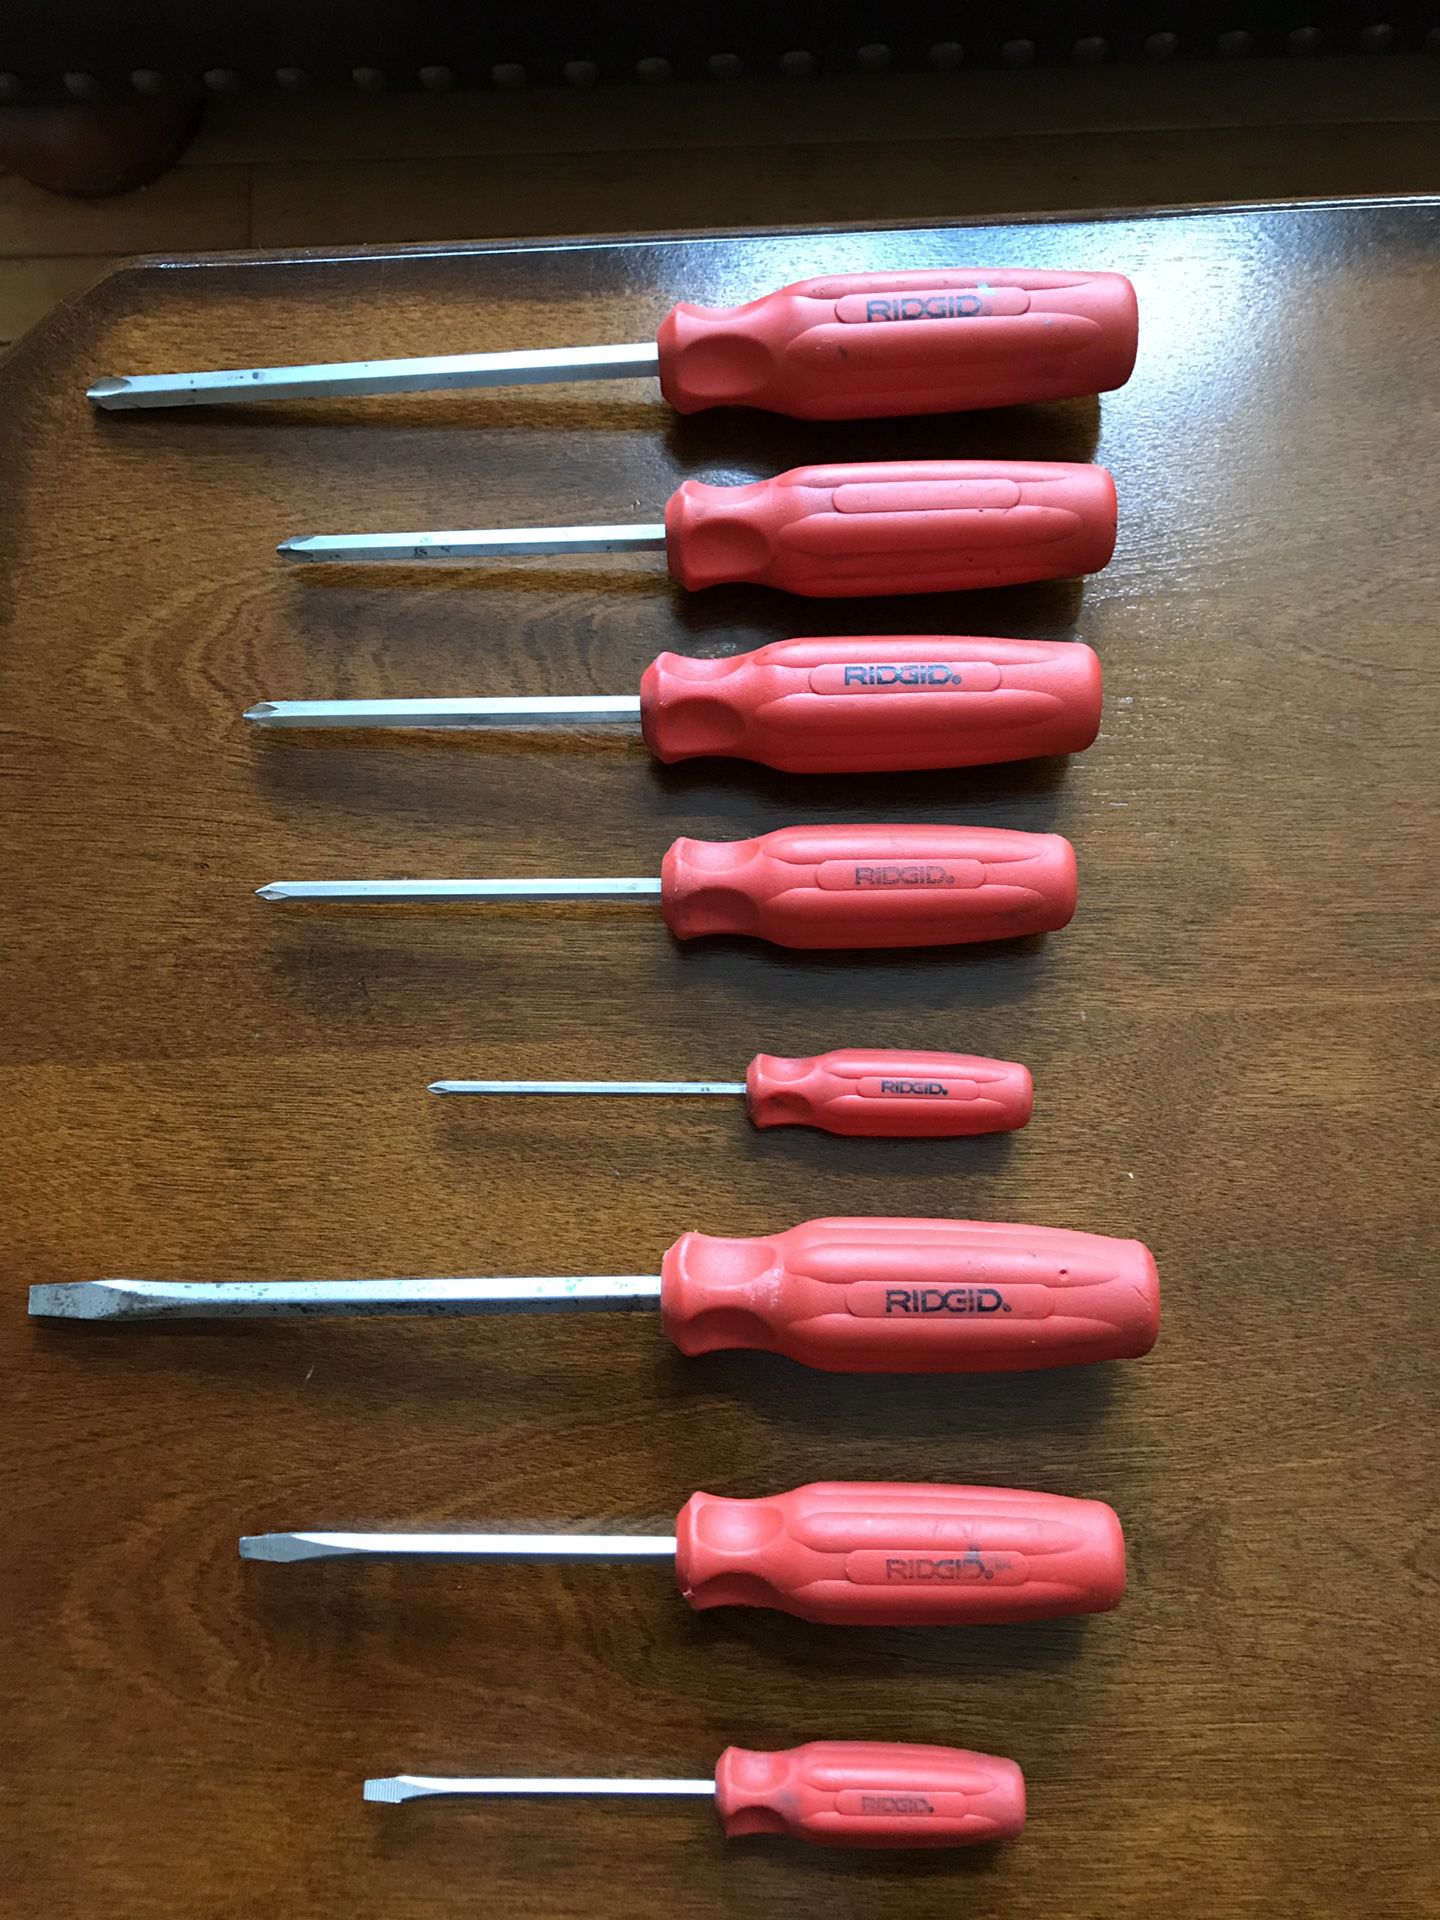 Ridgid 8 piece set of screwdrivers